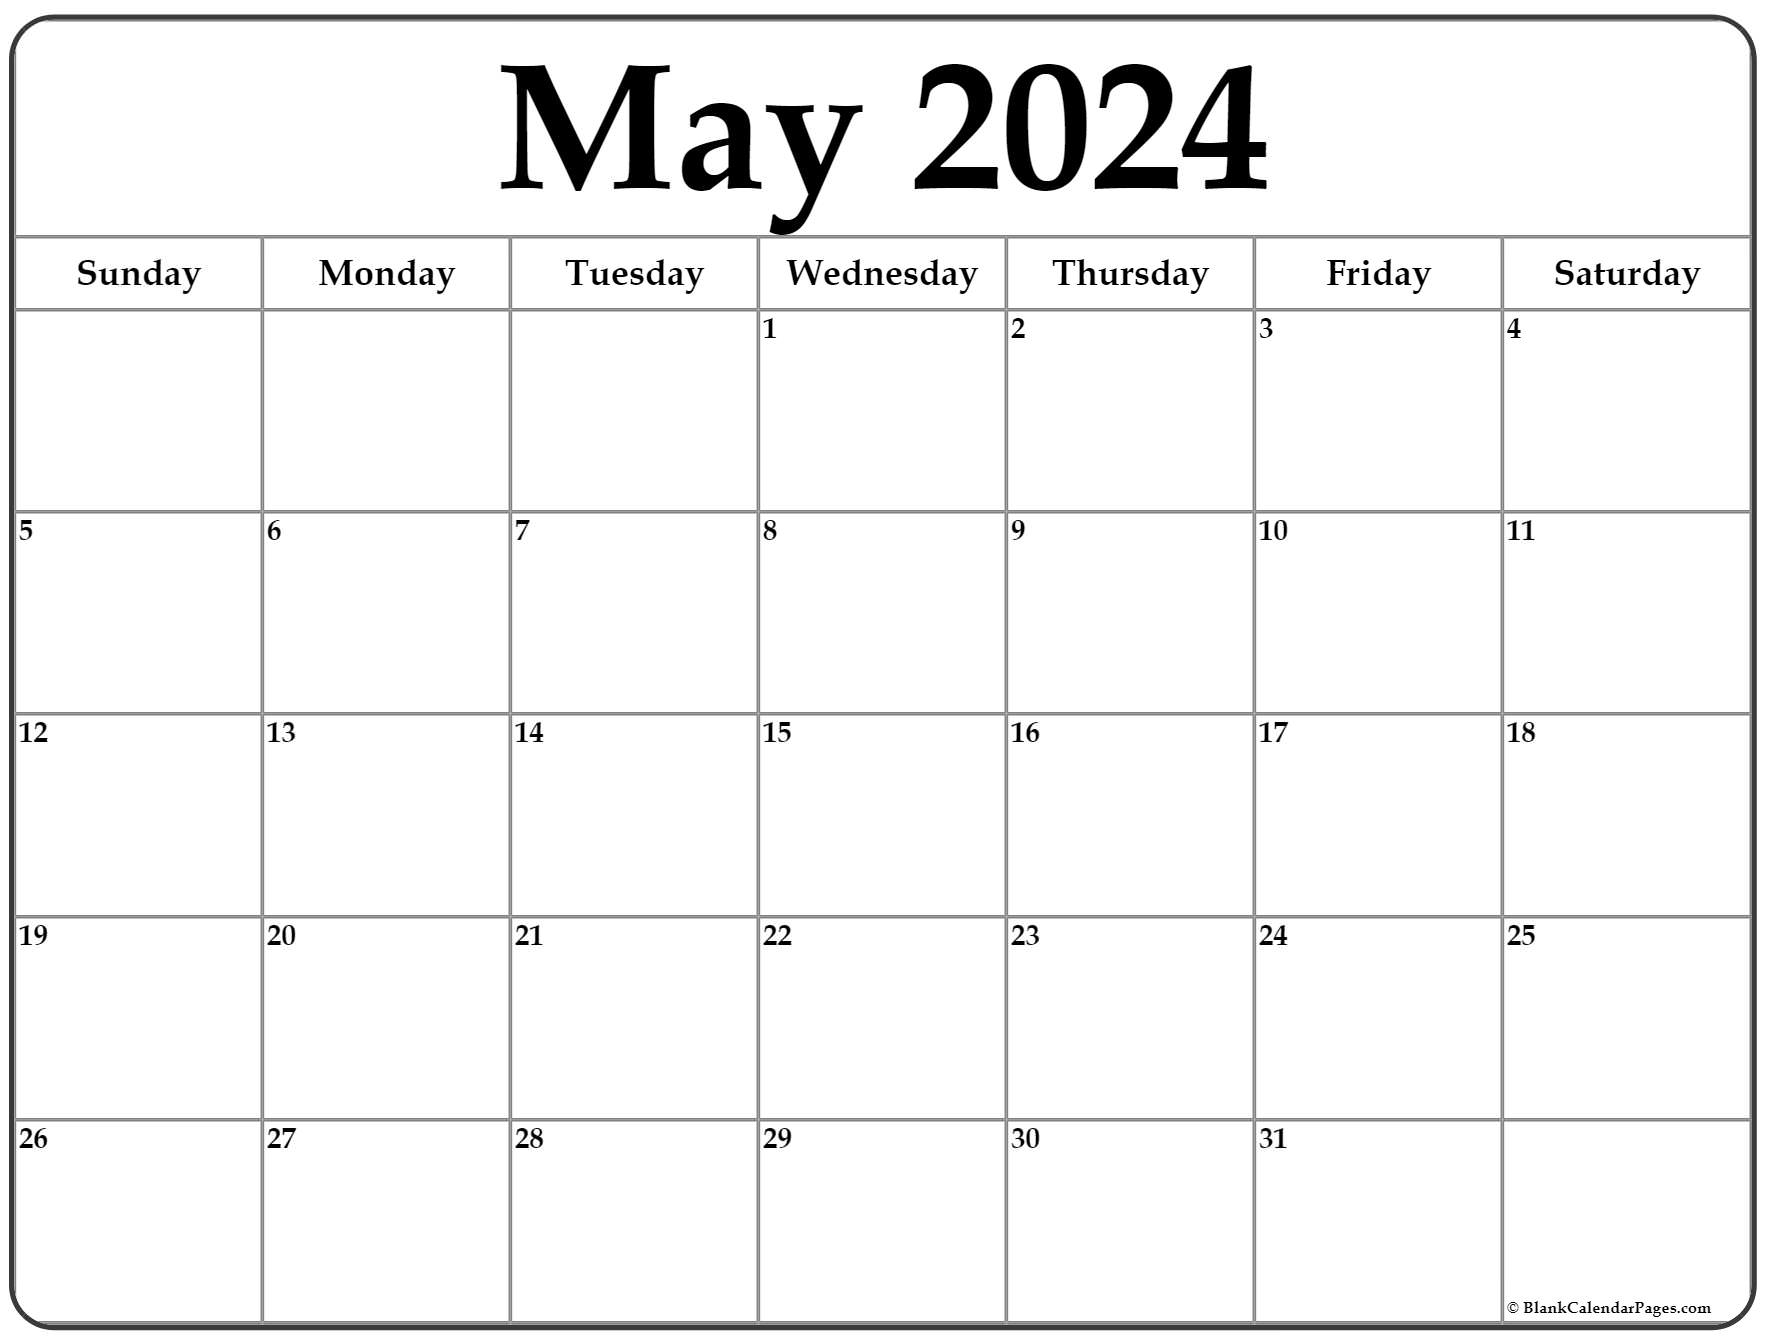 May 2024 Calendar | Free Printable Calendar for Printable May 2024 Calendar Free